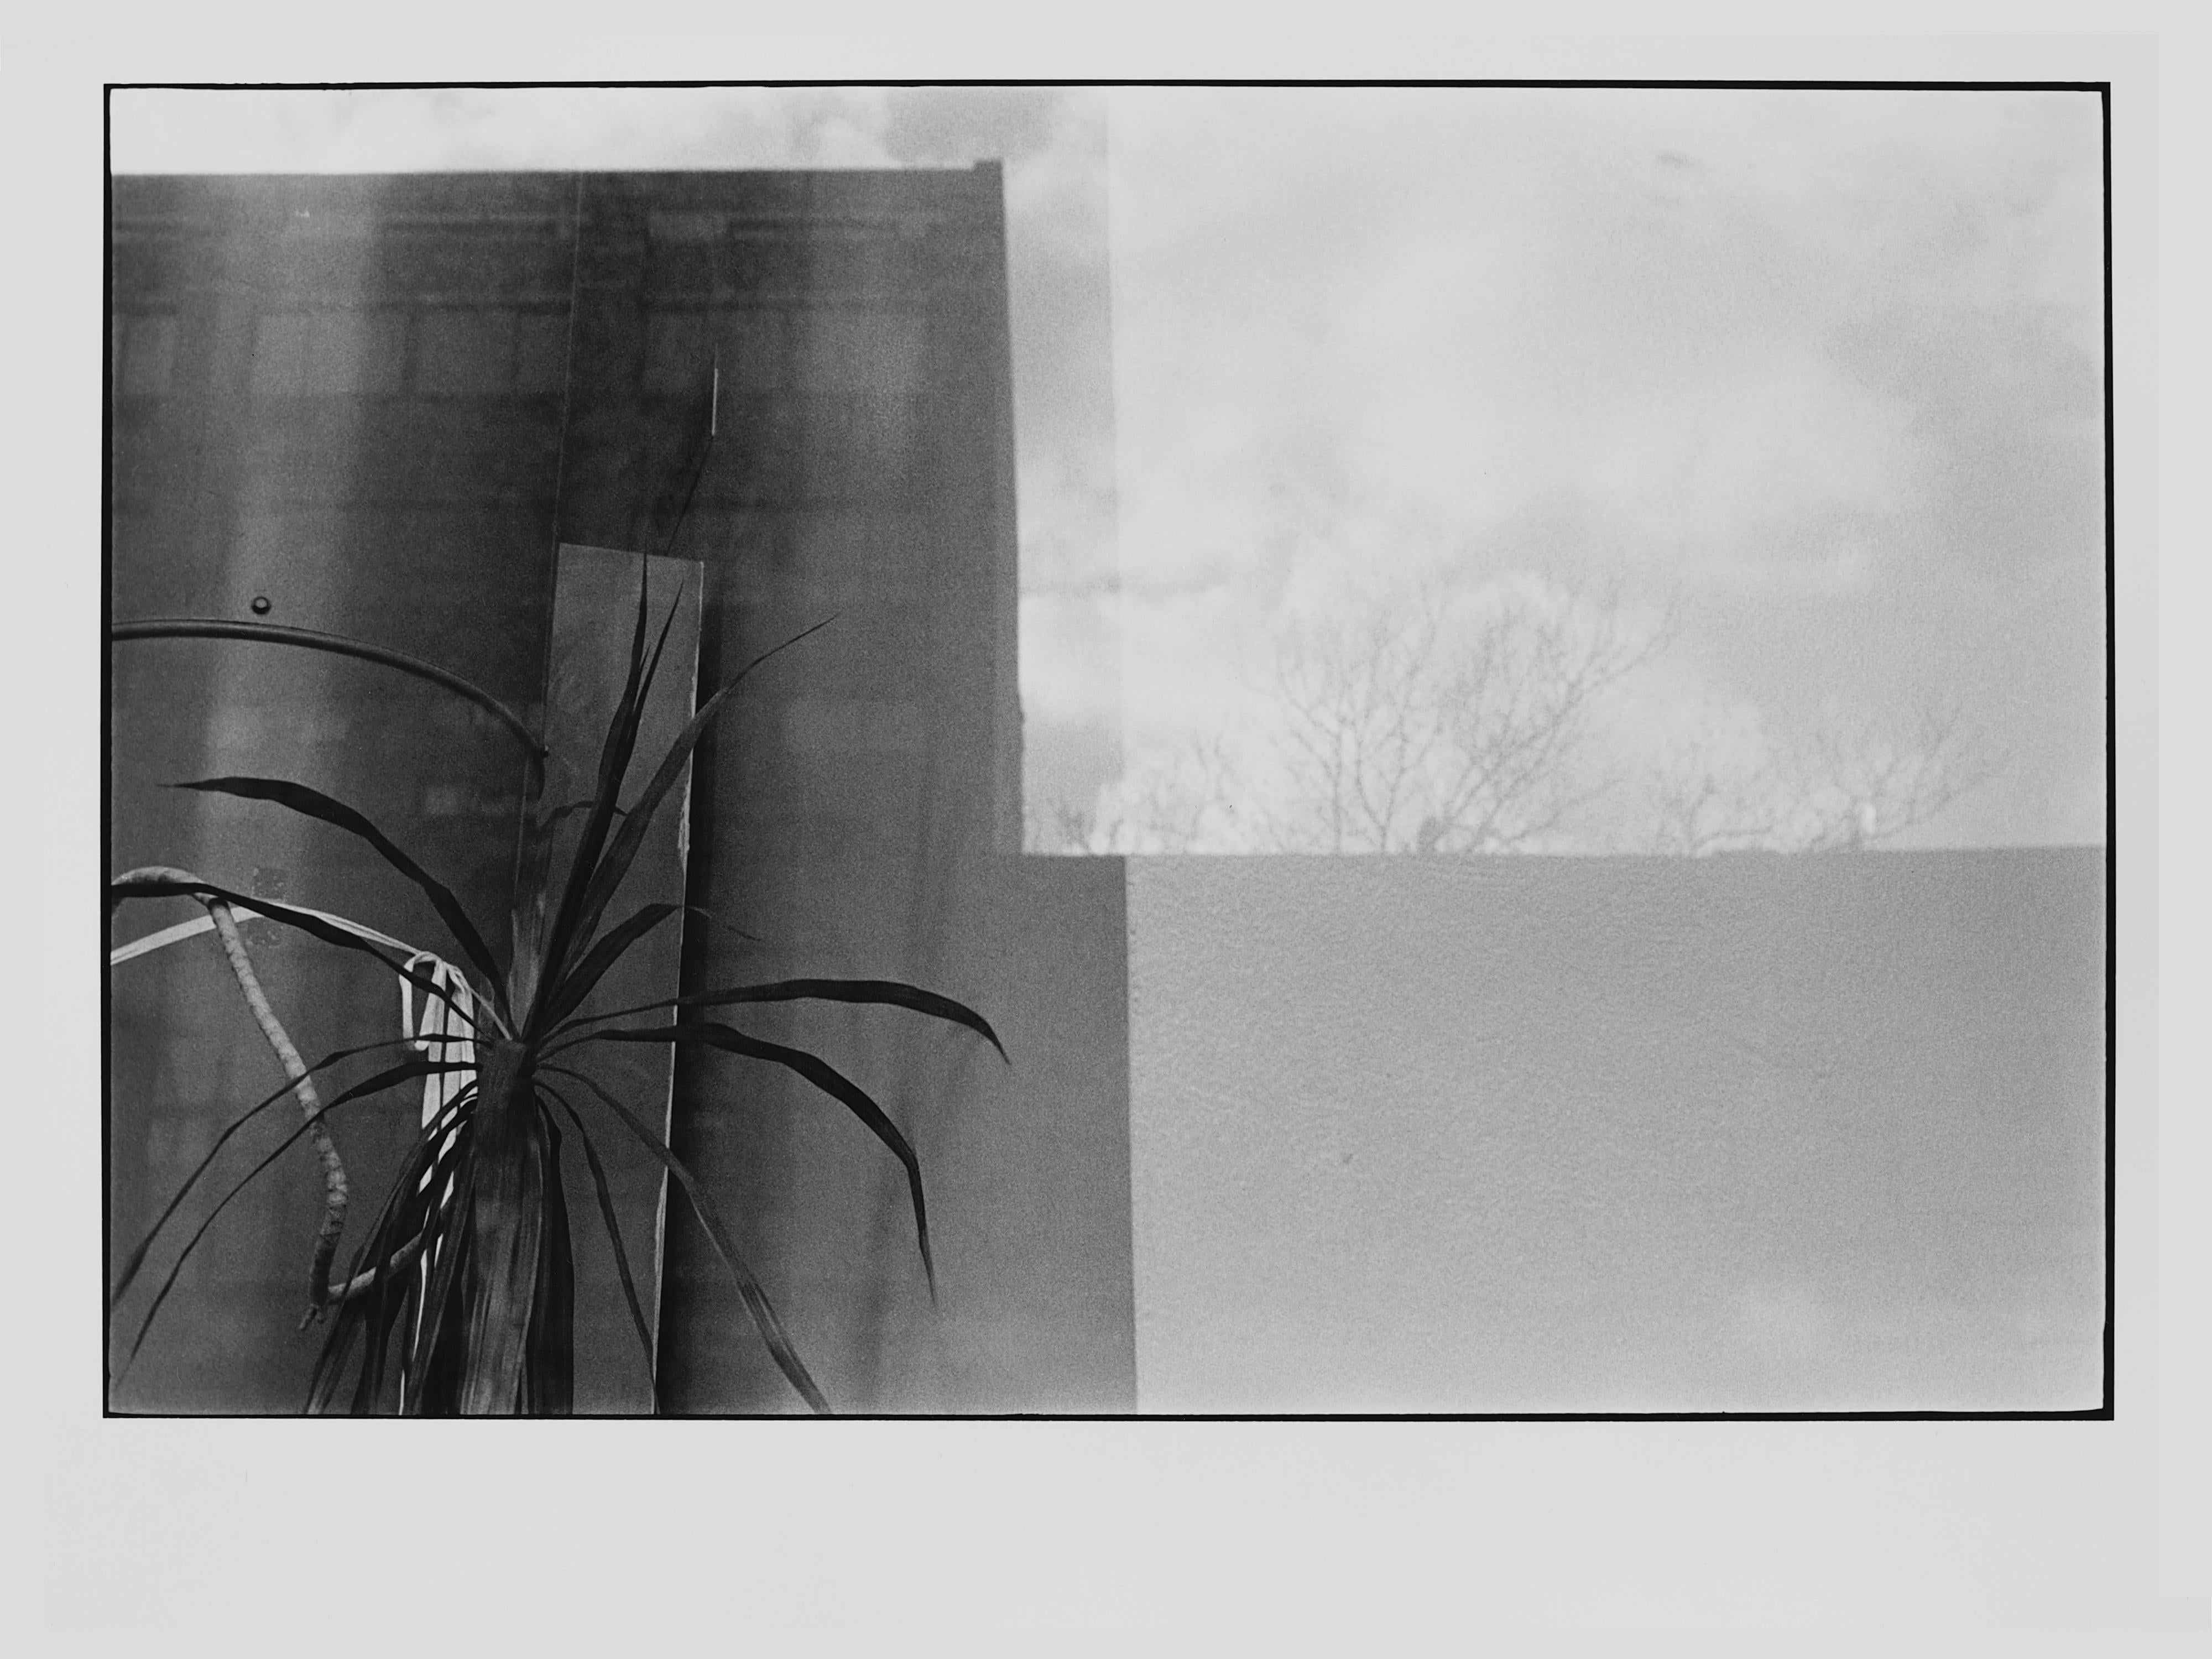 Koyo Tamaki Landscape Photograph - Untitled (0302-37), Abstract Photograph on Gelatin Print, 2011